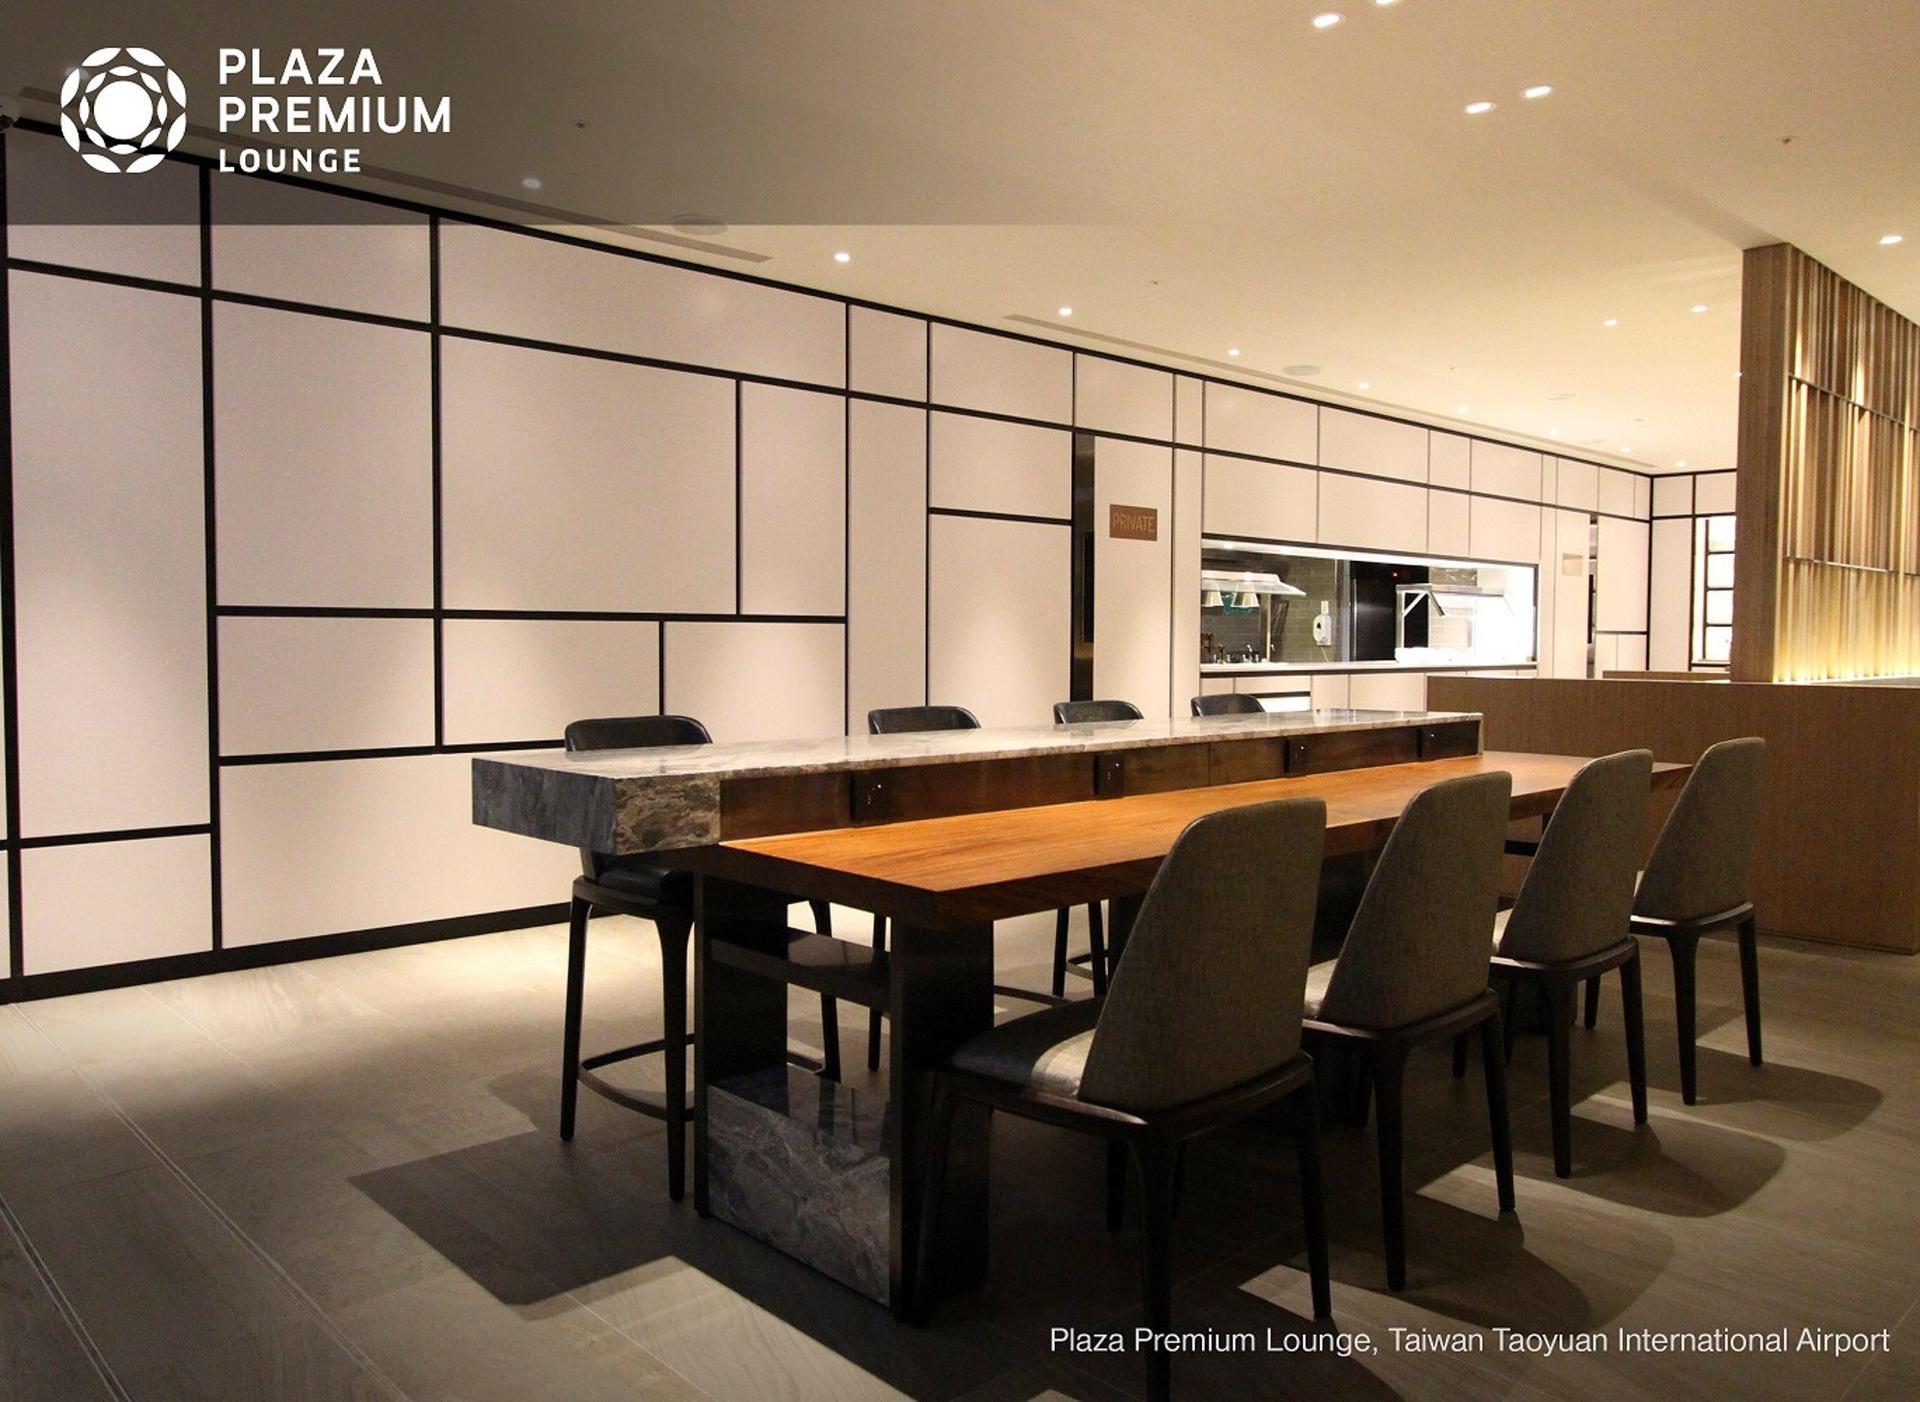 Plaza Premium Lounge (Zone A) image 21 of 99